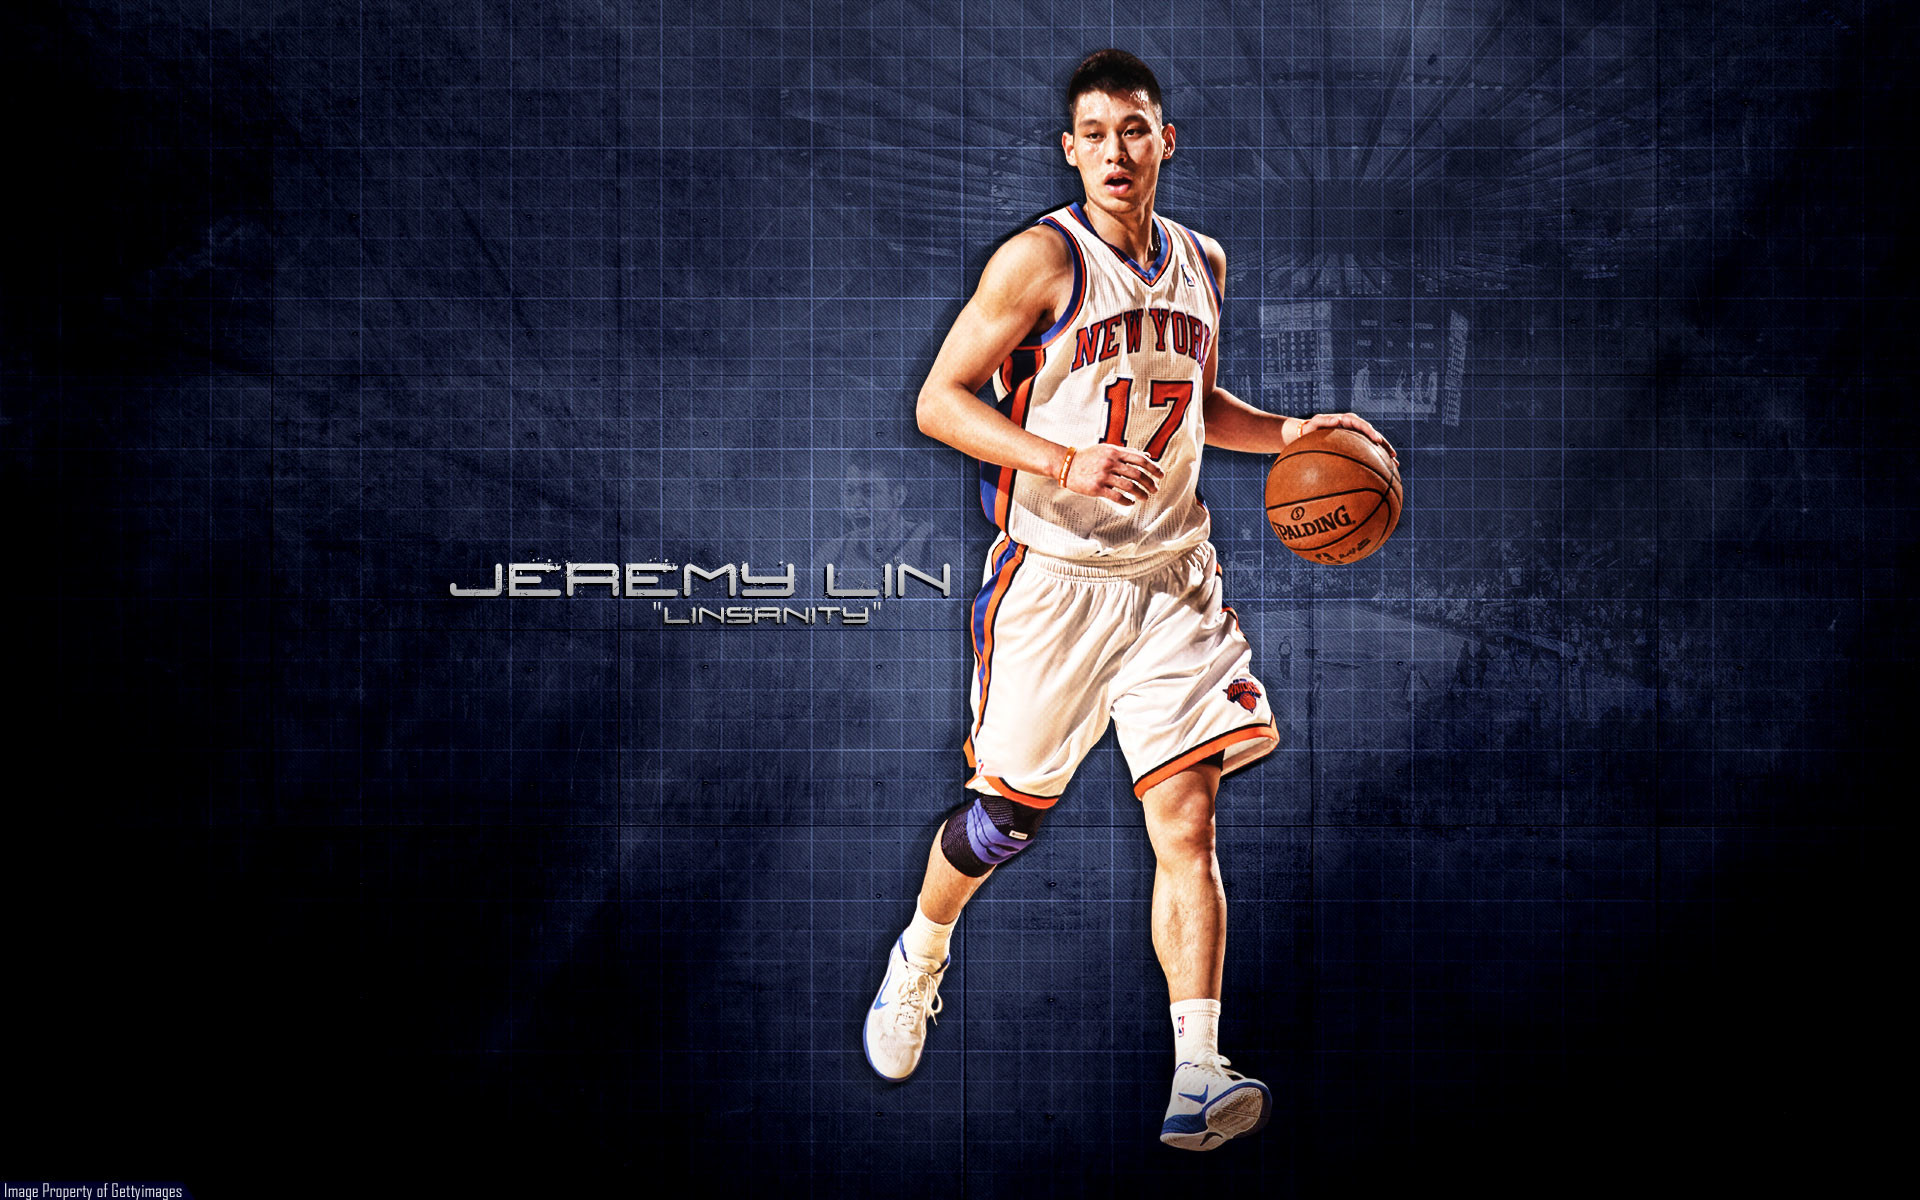 Jeremy Lin Wallpaper Image